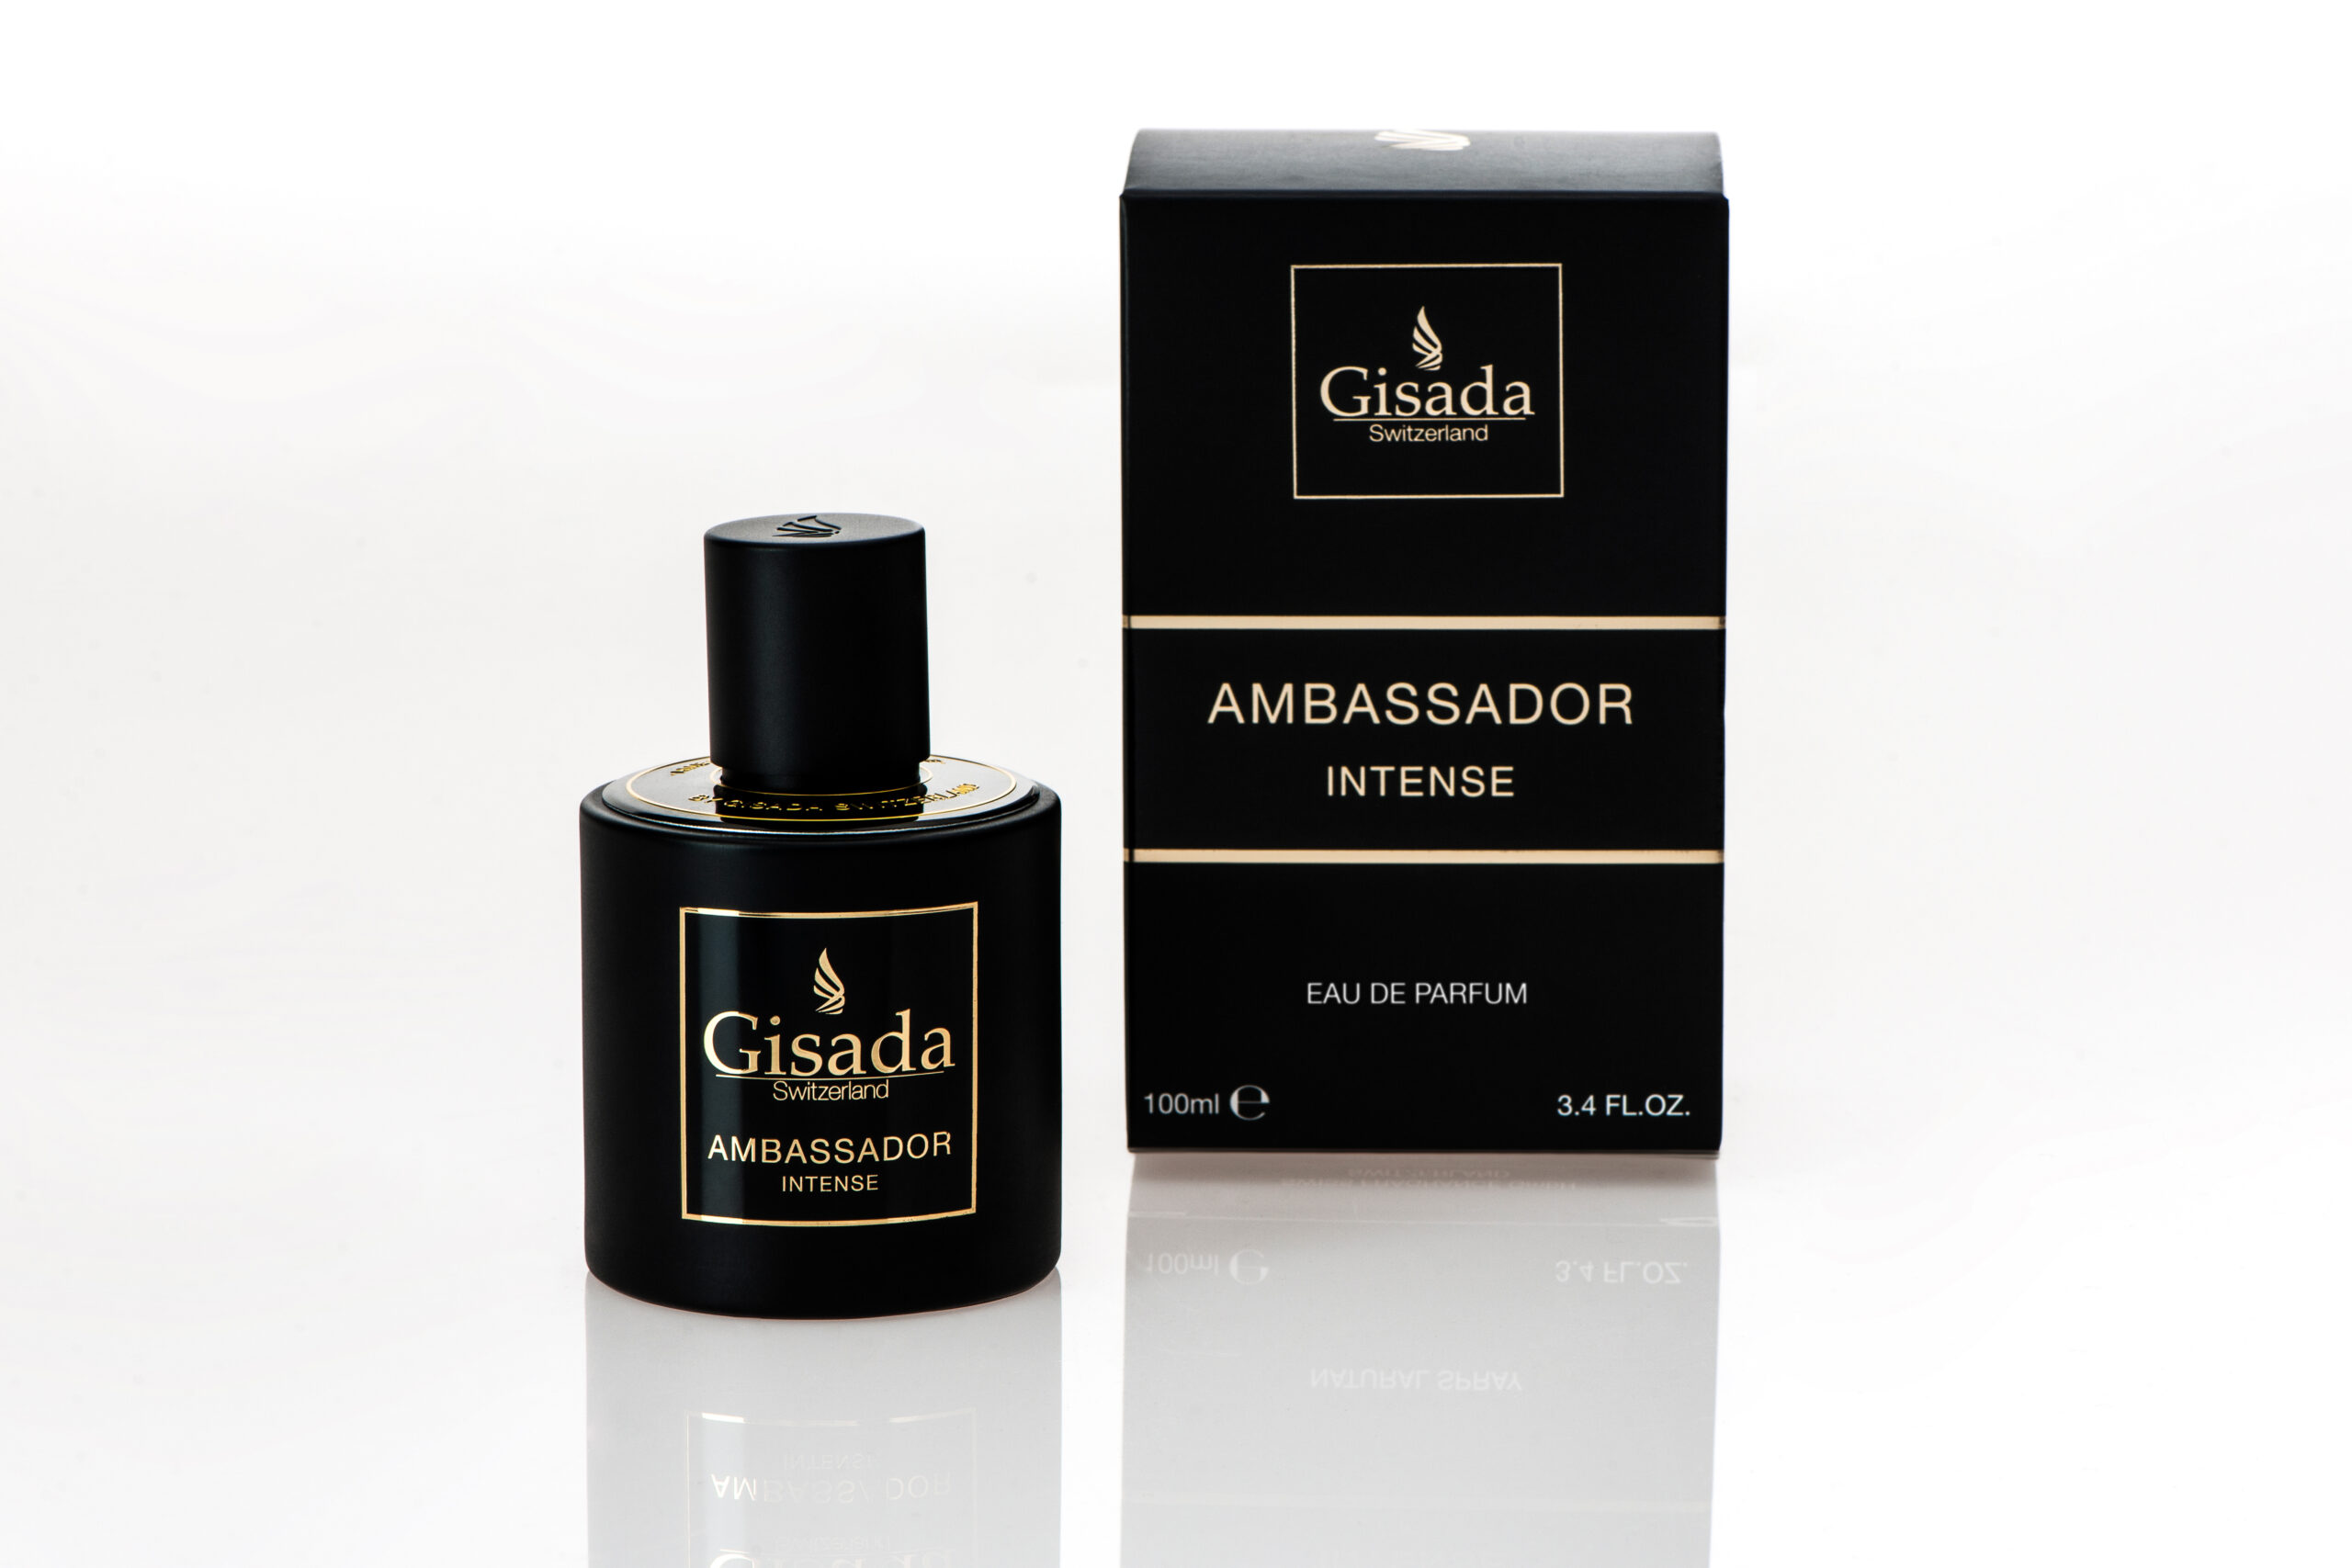 Gisada_Ambassador Intense Perfume_with packaging